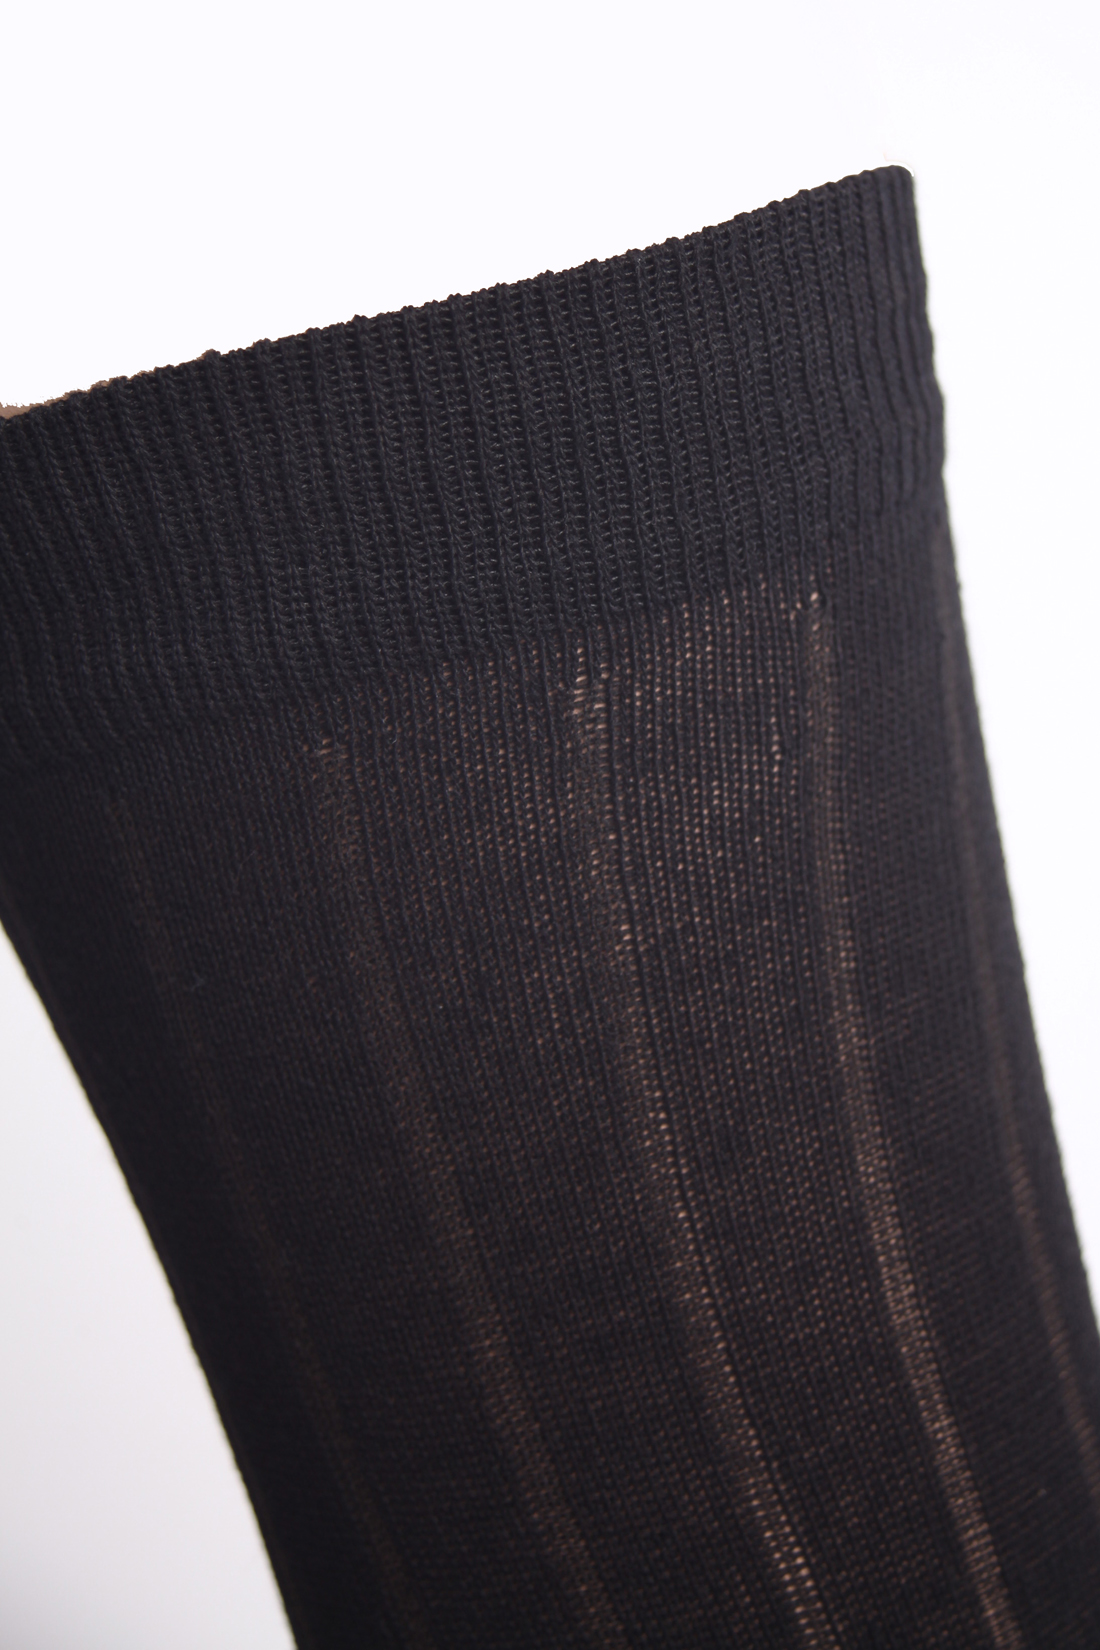 Мужские носки, 2 пары (арт. baon B891110), размер 40/42, цвет черный Мужские носки, 2 пары (арт. baon B891110) - фото 2